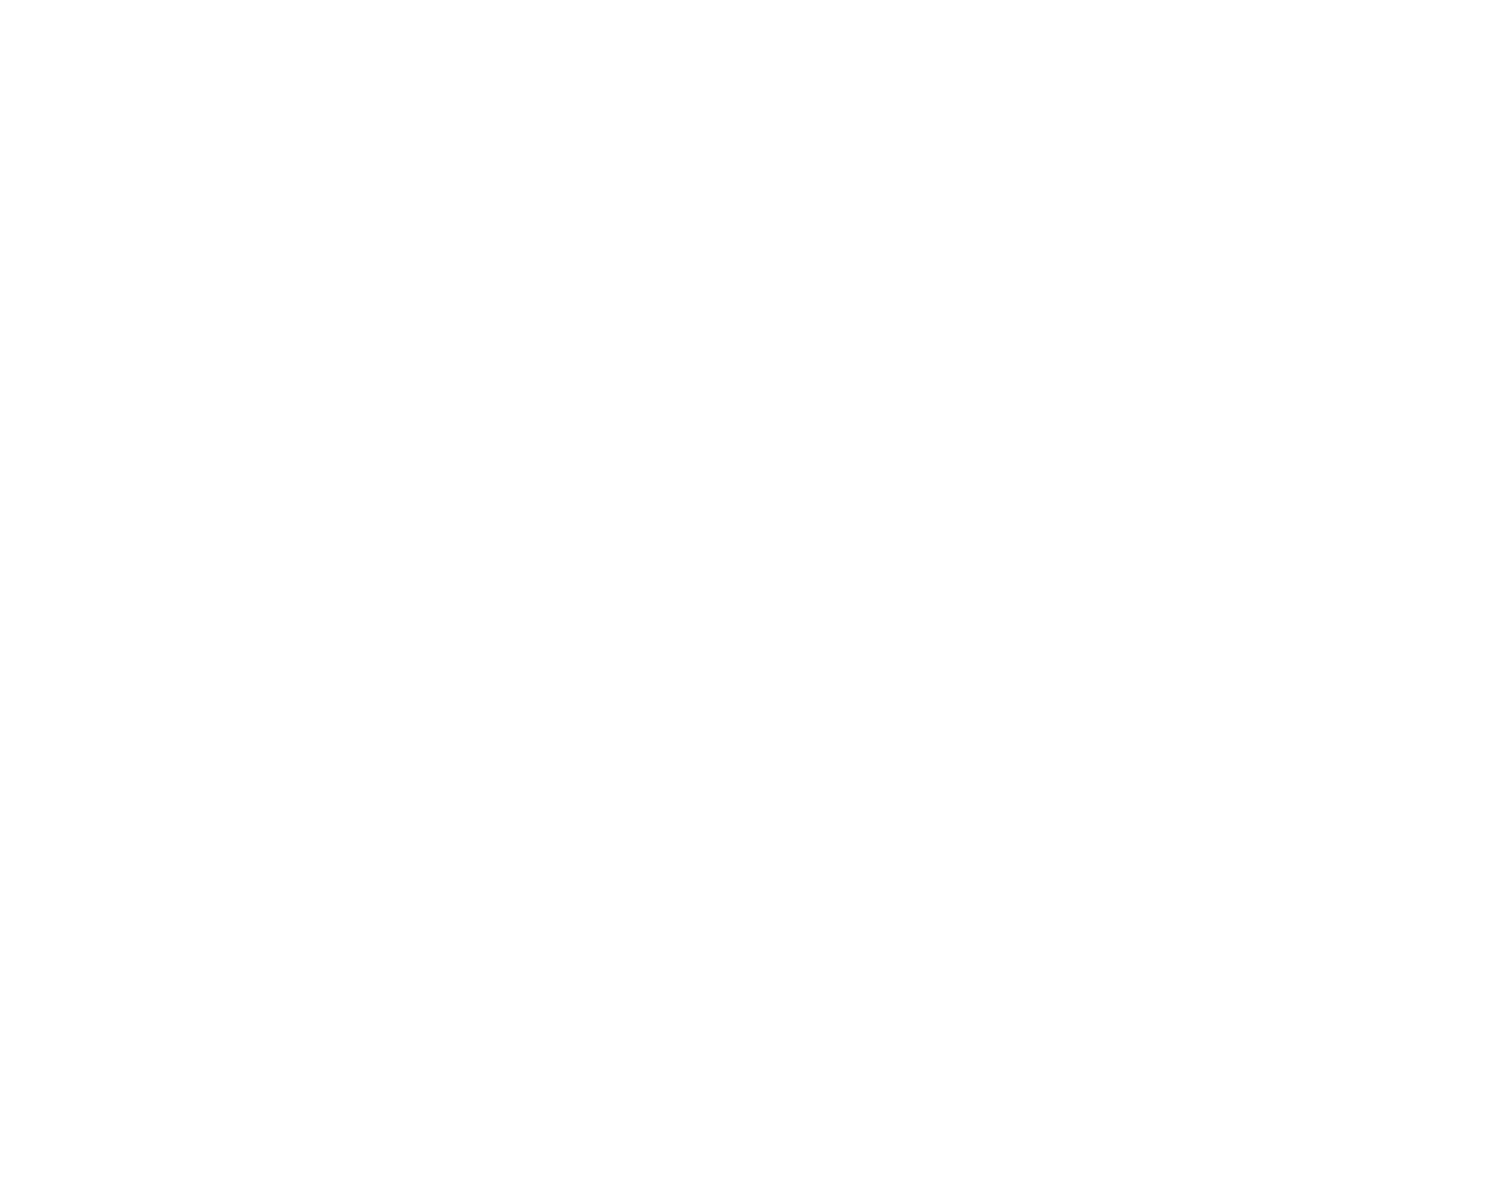 TRANSMISSION WELLNESS